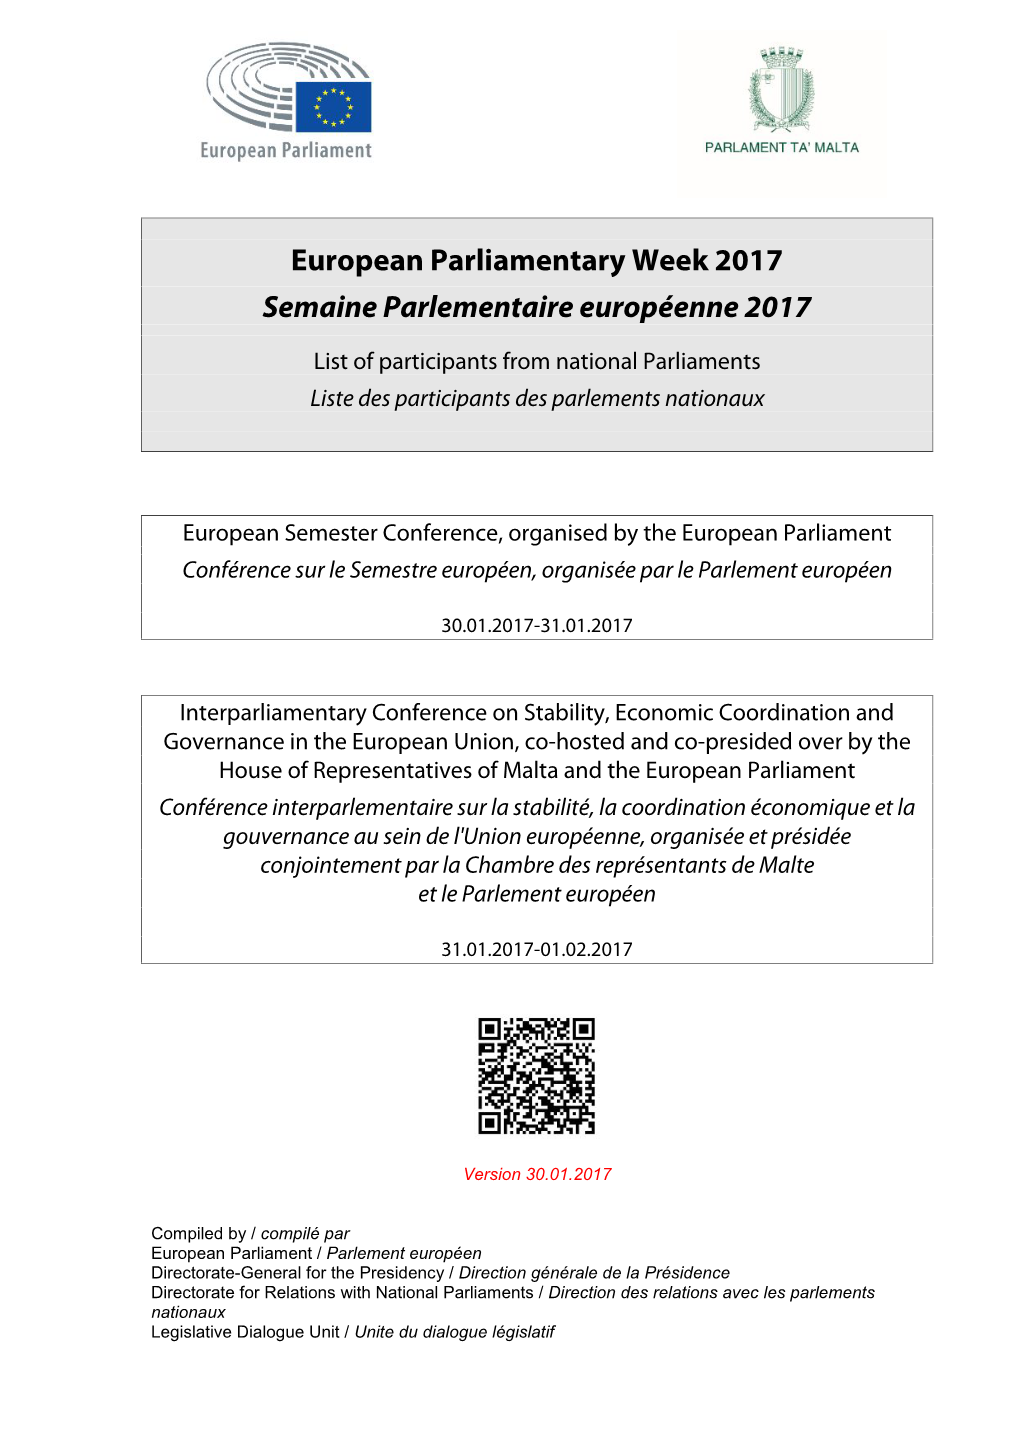 European Parliamentary Week 2017 Semaine Parlementaire Européenne 2017